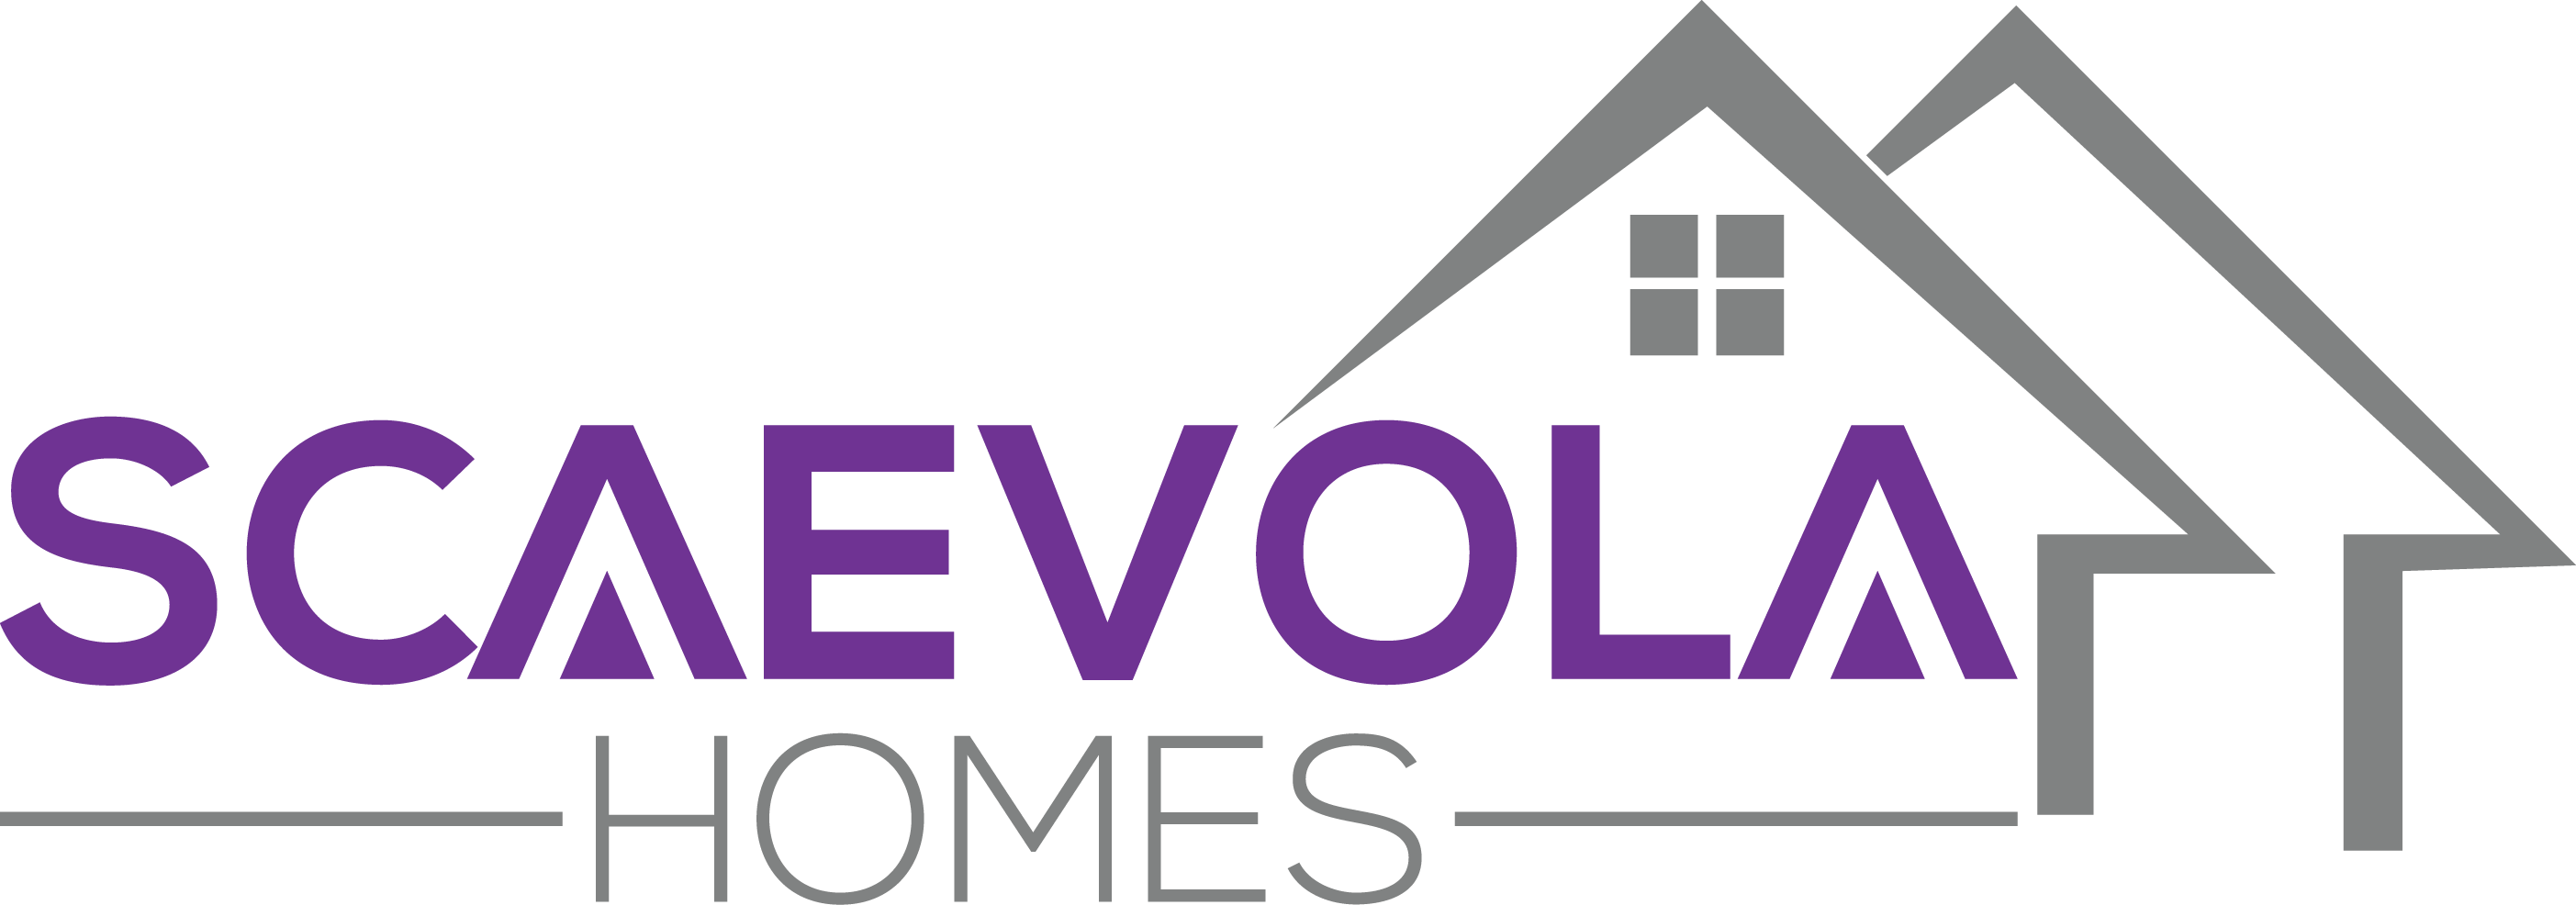 Scaevola Homes Logo